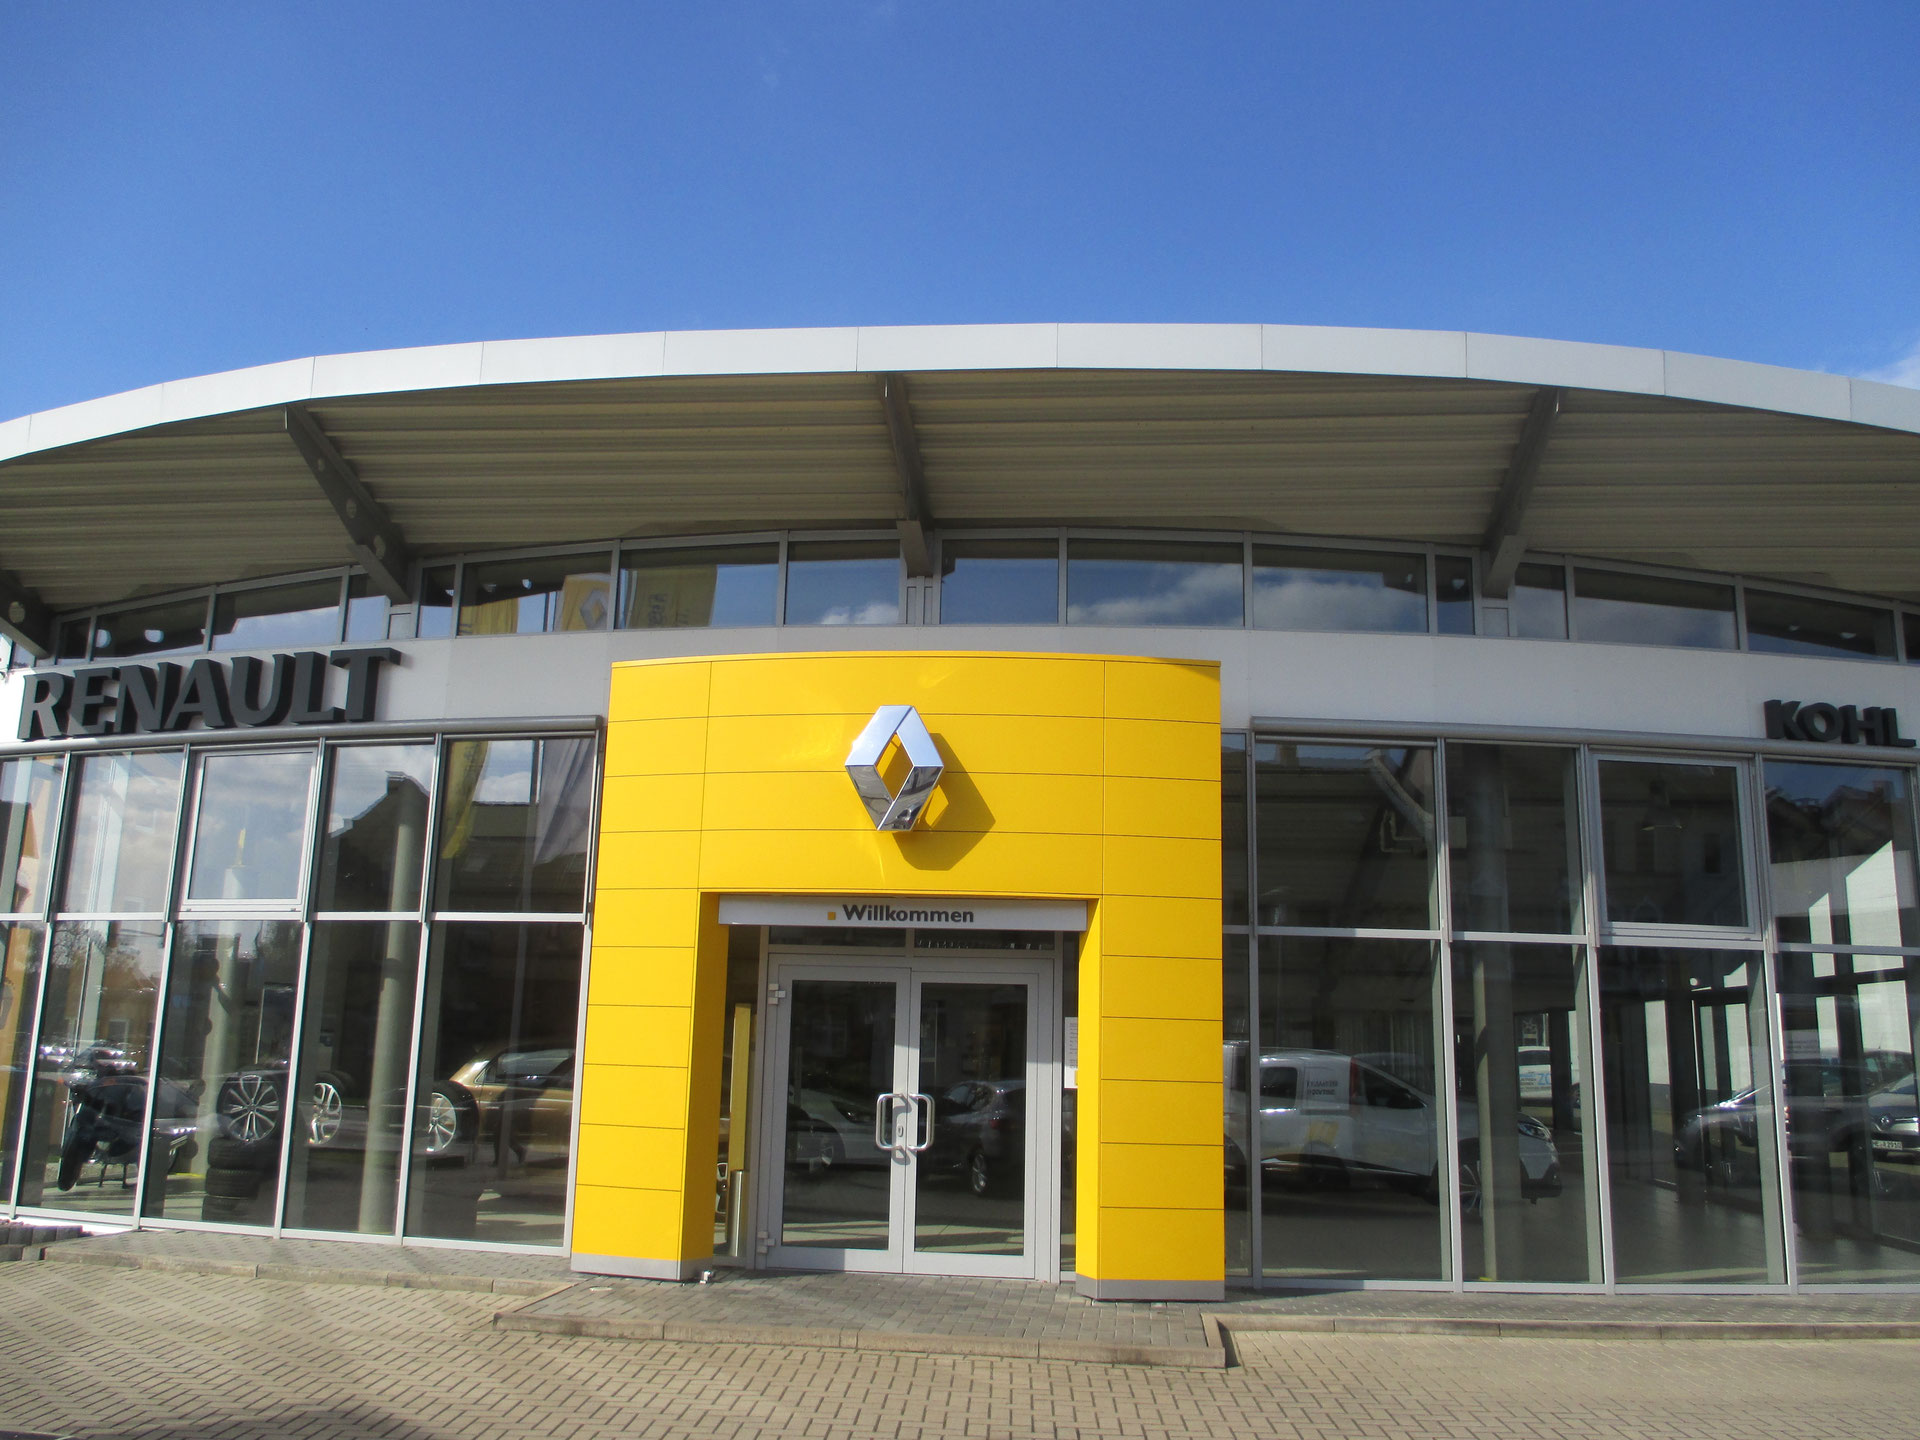 (c) Renault-kohl.de